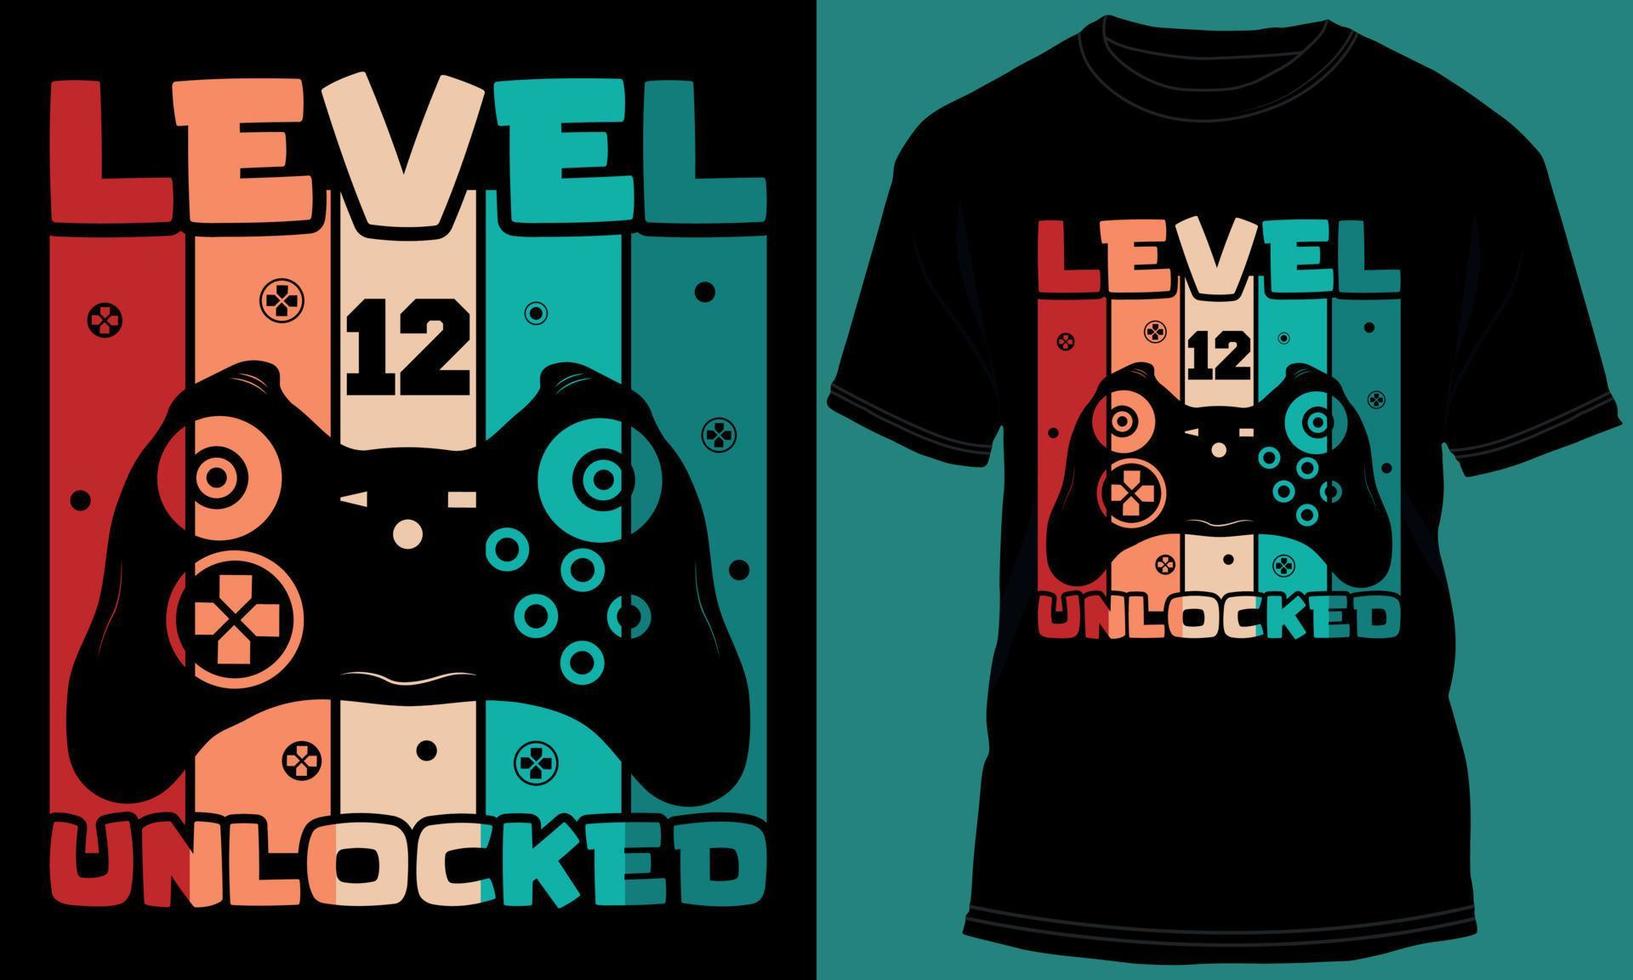 jugador o juego de azar nivel 12 desbloqueado camiseta diseño vector